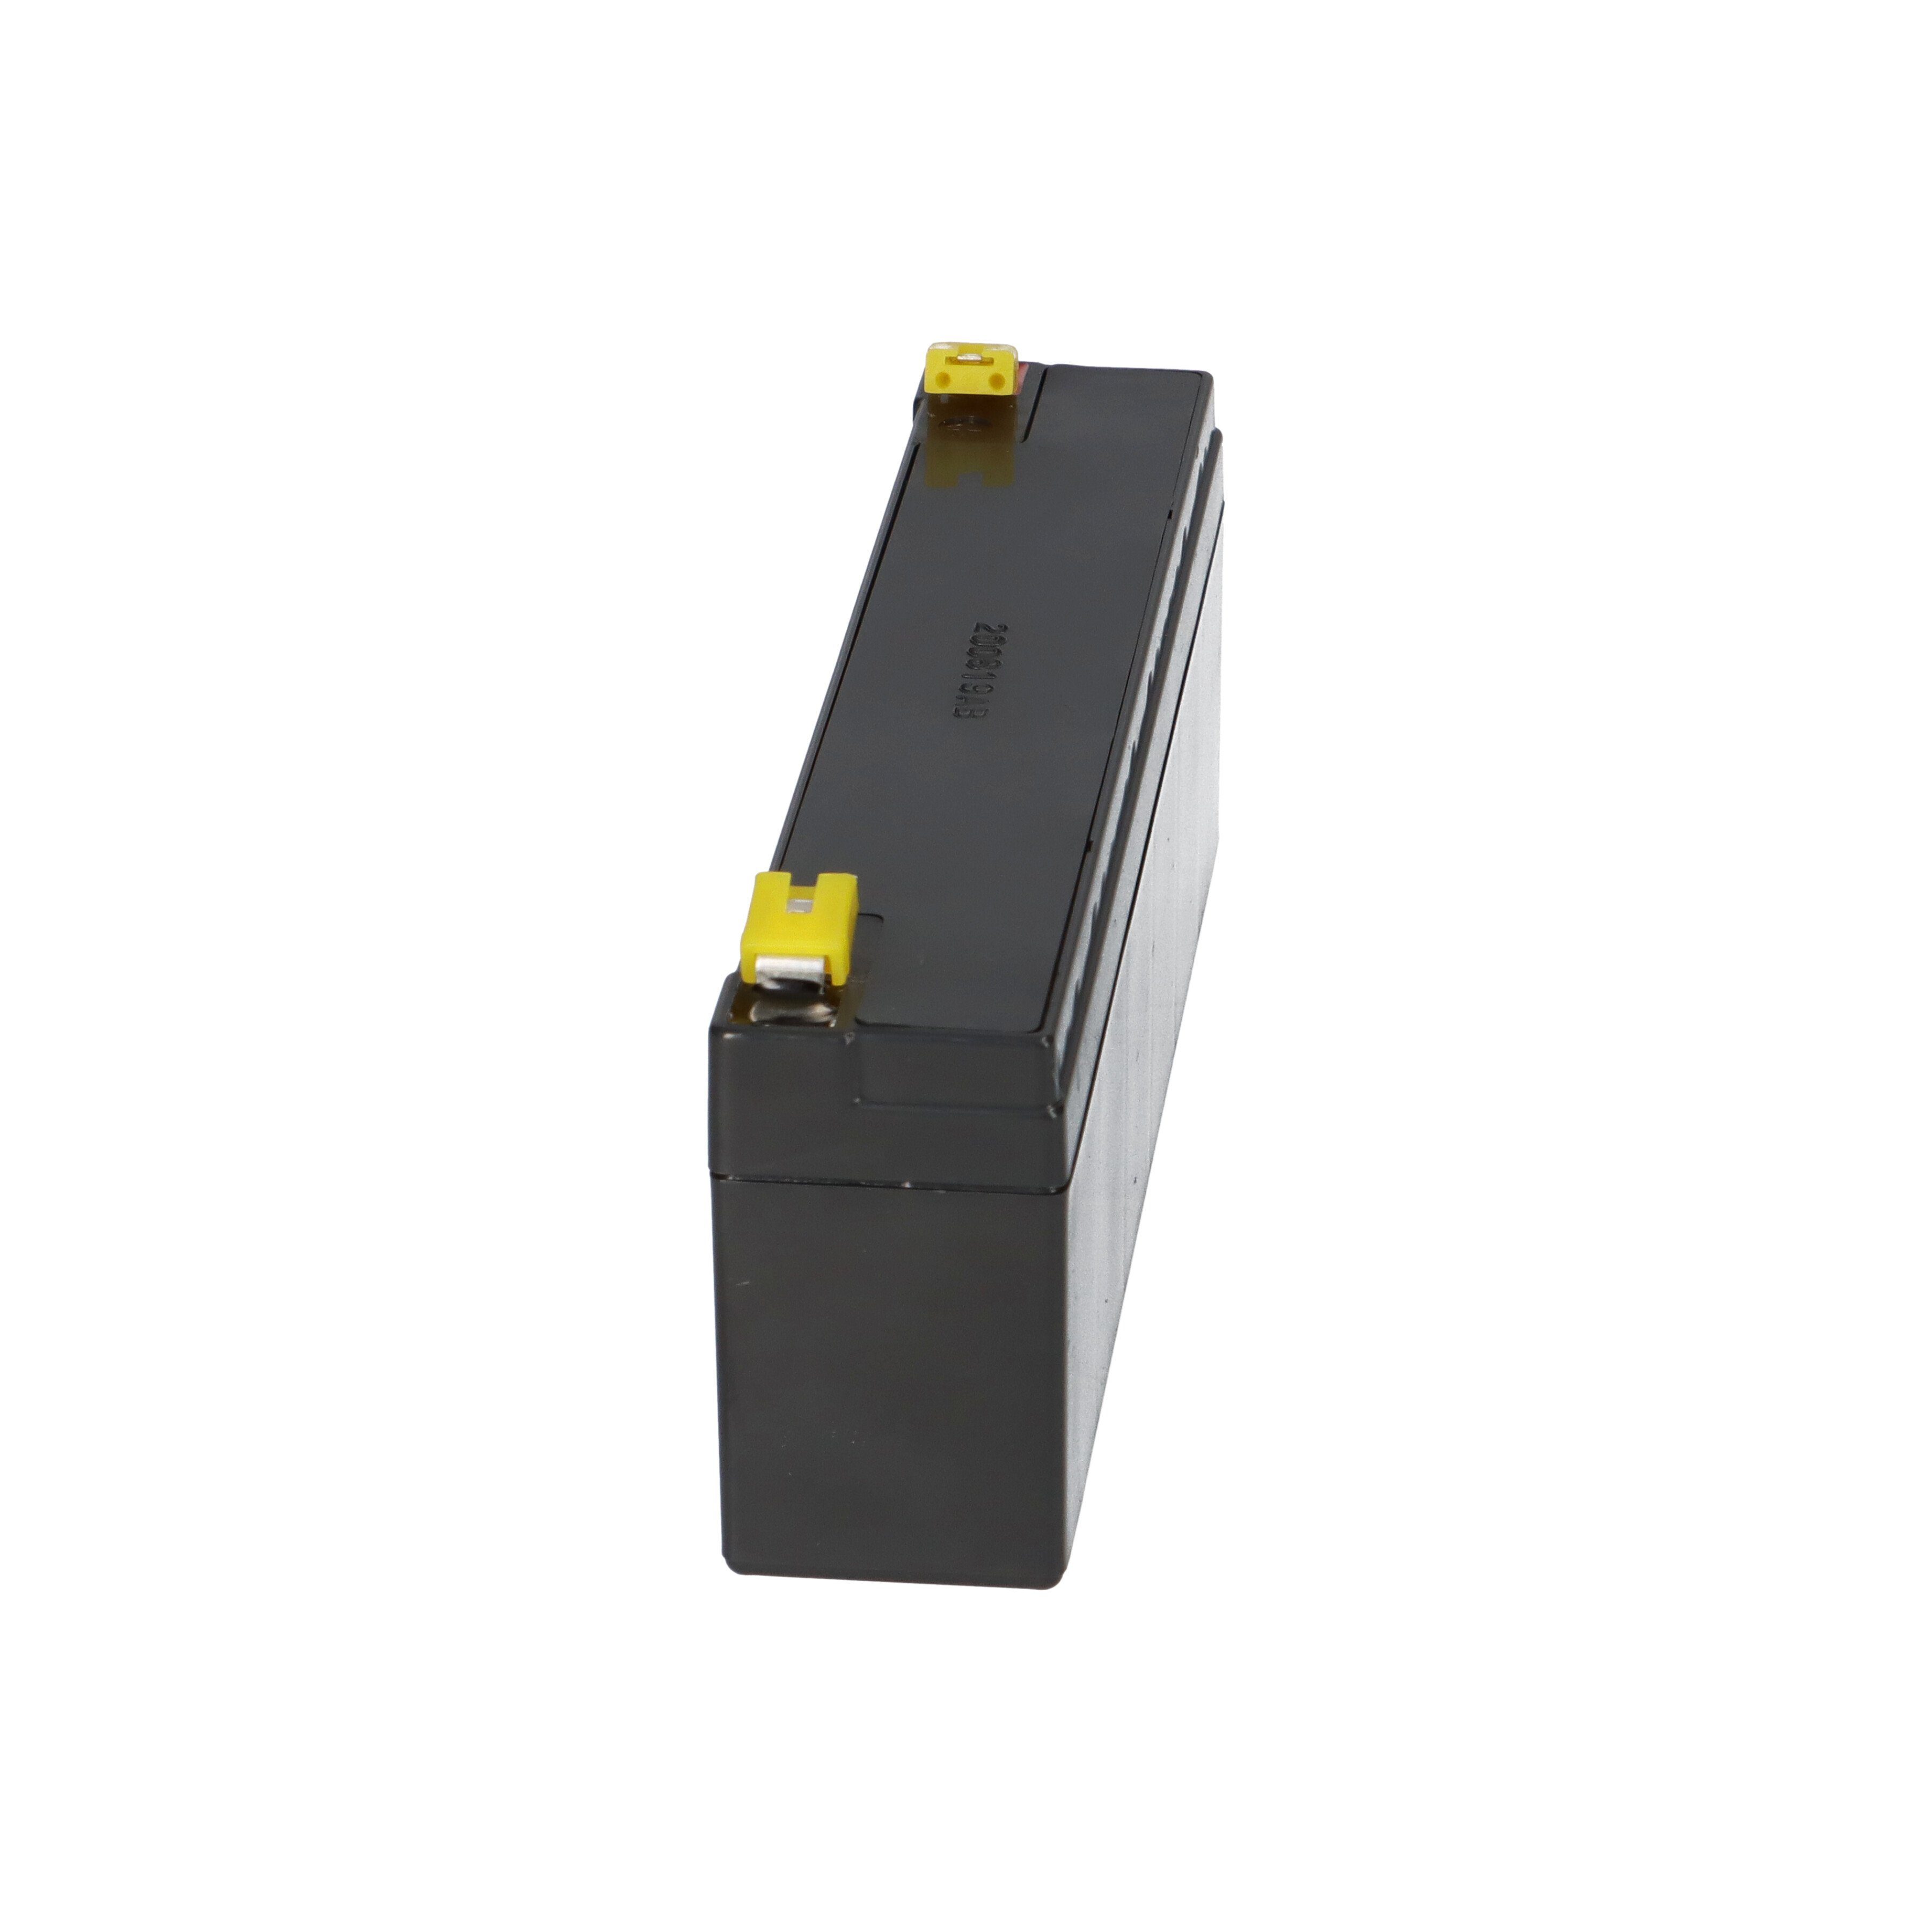 Kung Long 2x 12V 2,2Ah AGM kompatibel A VdS Bleiakkus Vitacard Defibrillator